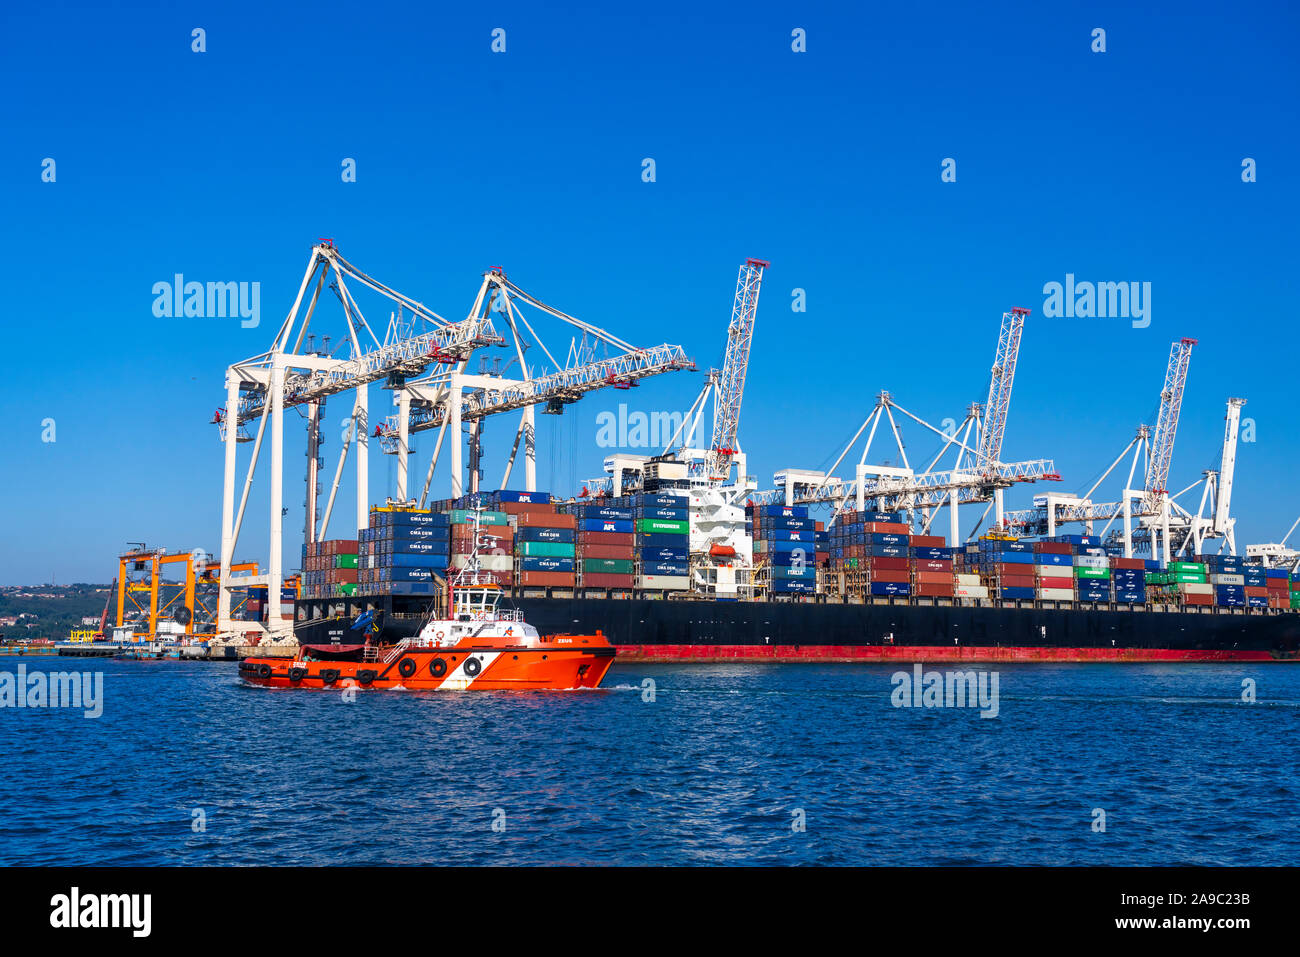 The Adriatic container port facilities of Koper, Slovenia, Europe. Stock Photo